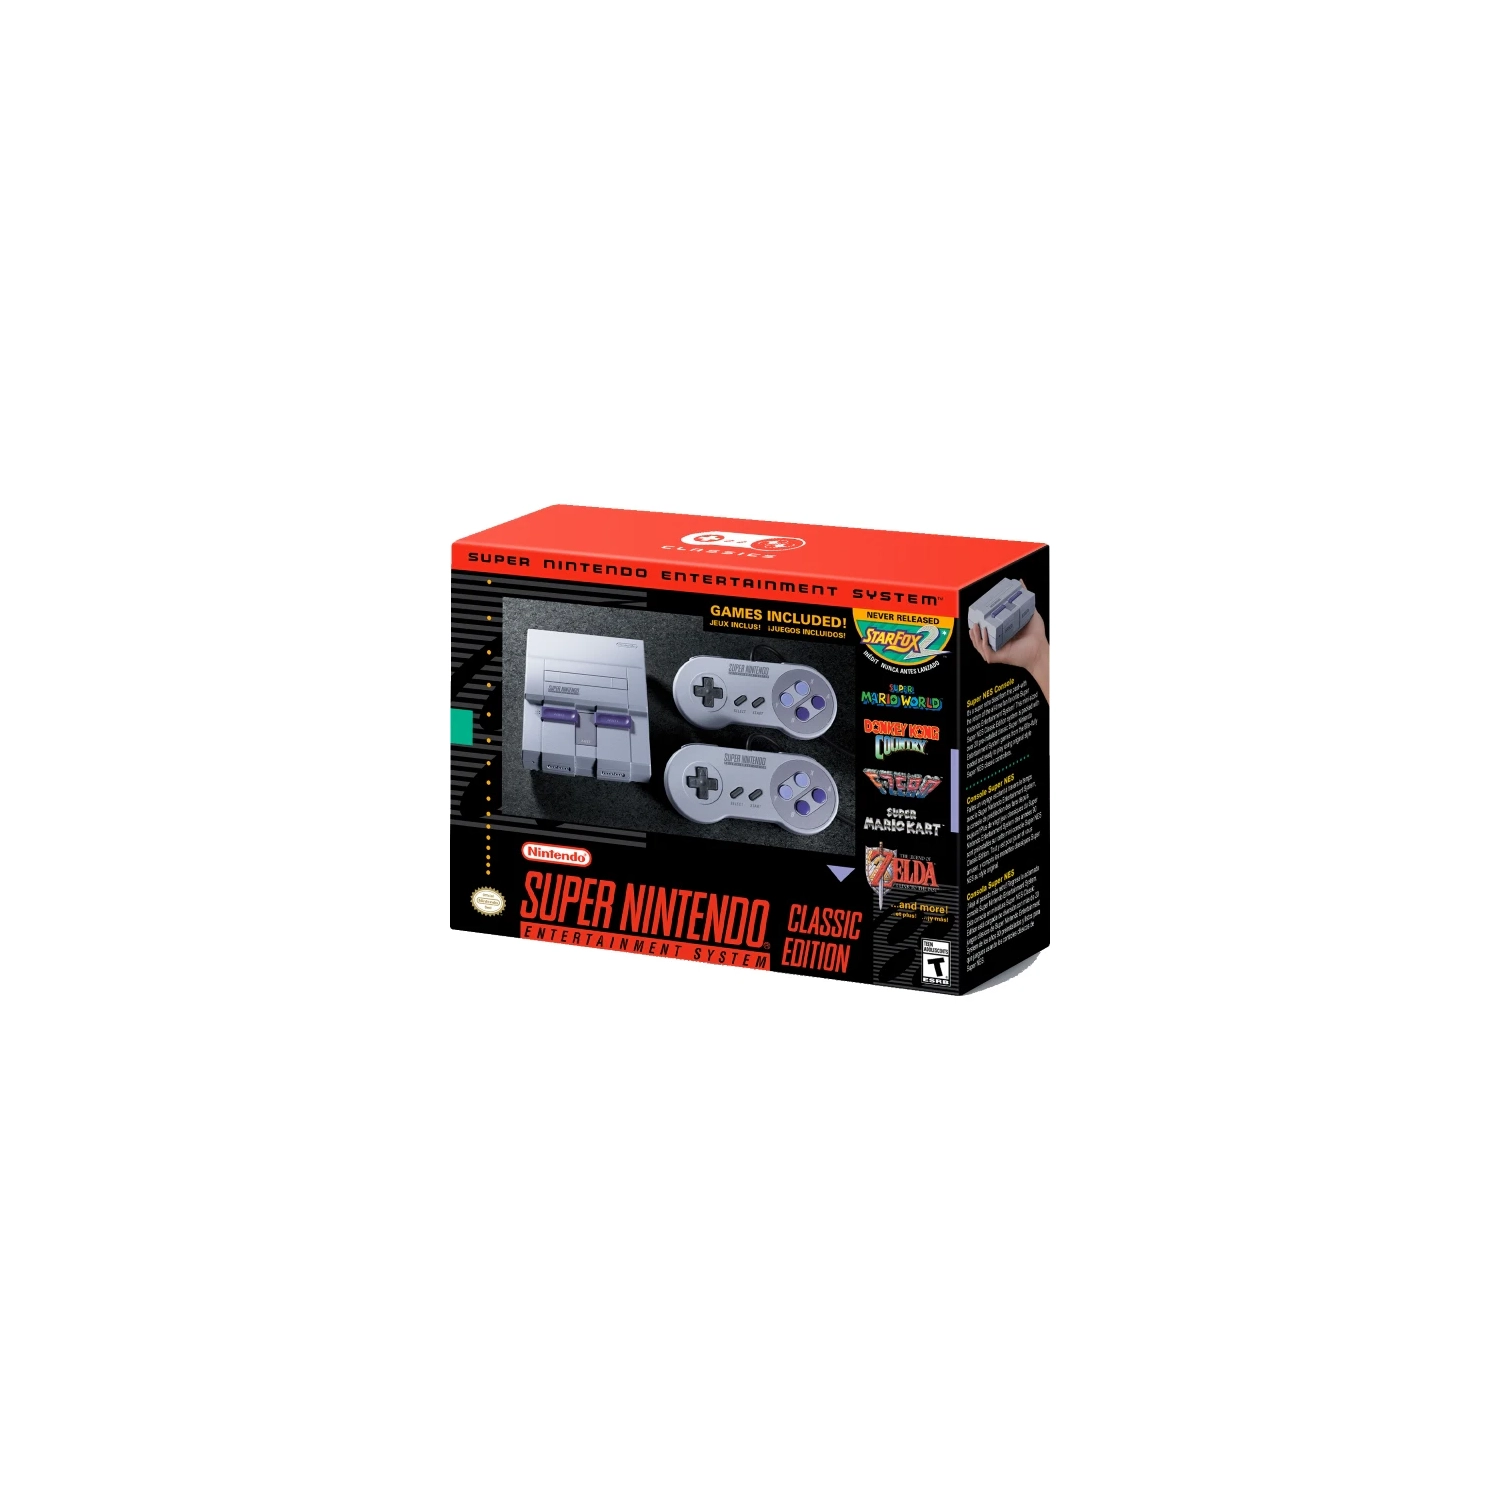 Super Nintendo Entertainment System SNES Classic Mini - NTSC Edition [Retro System] - Open Box